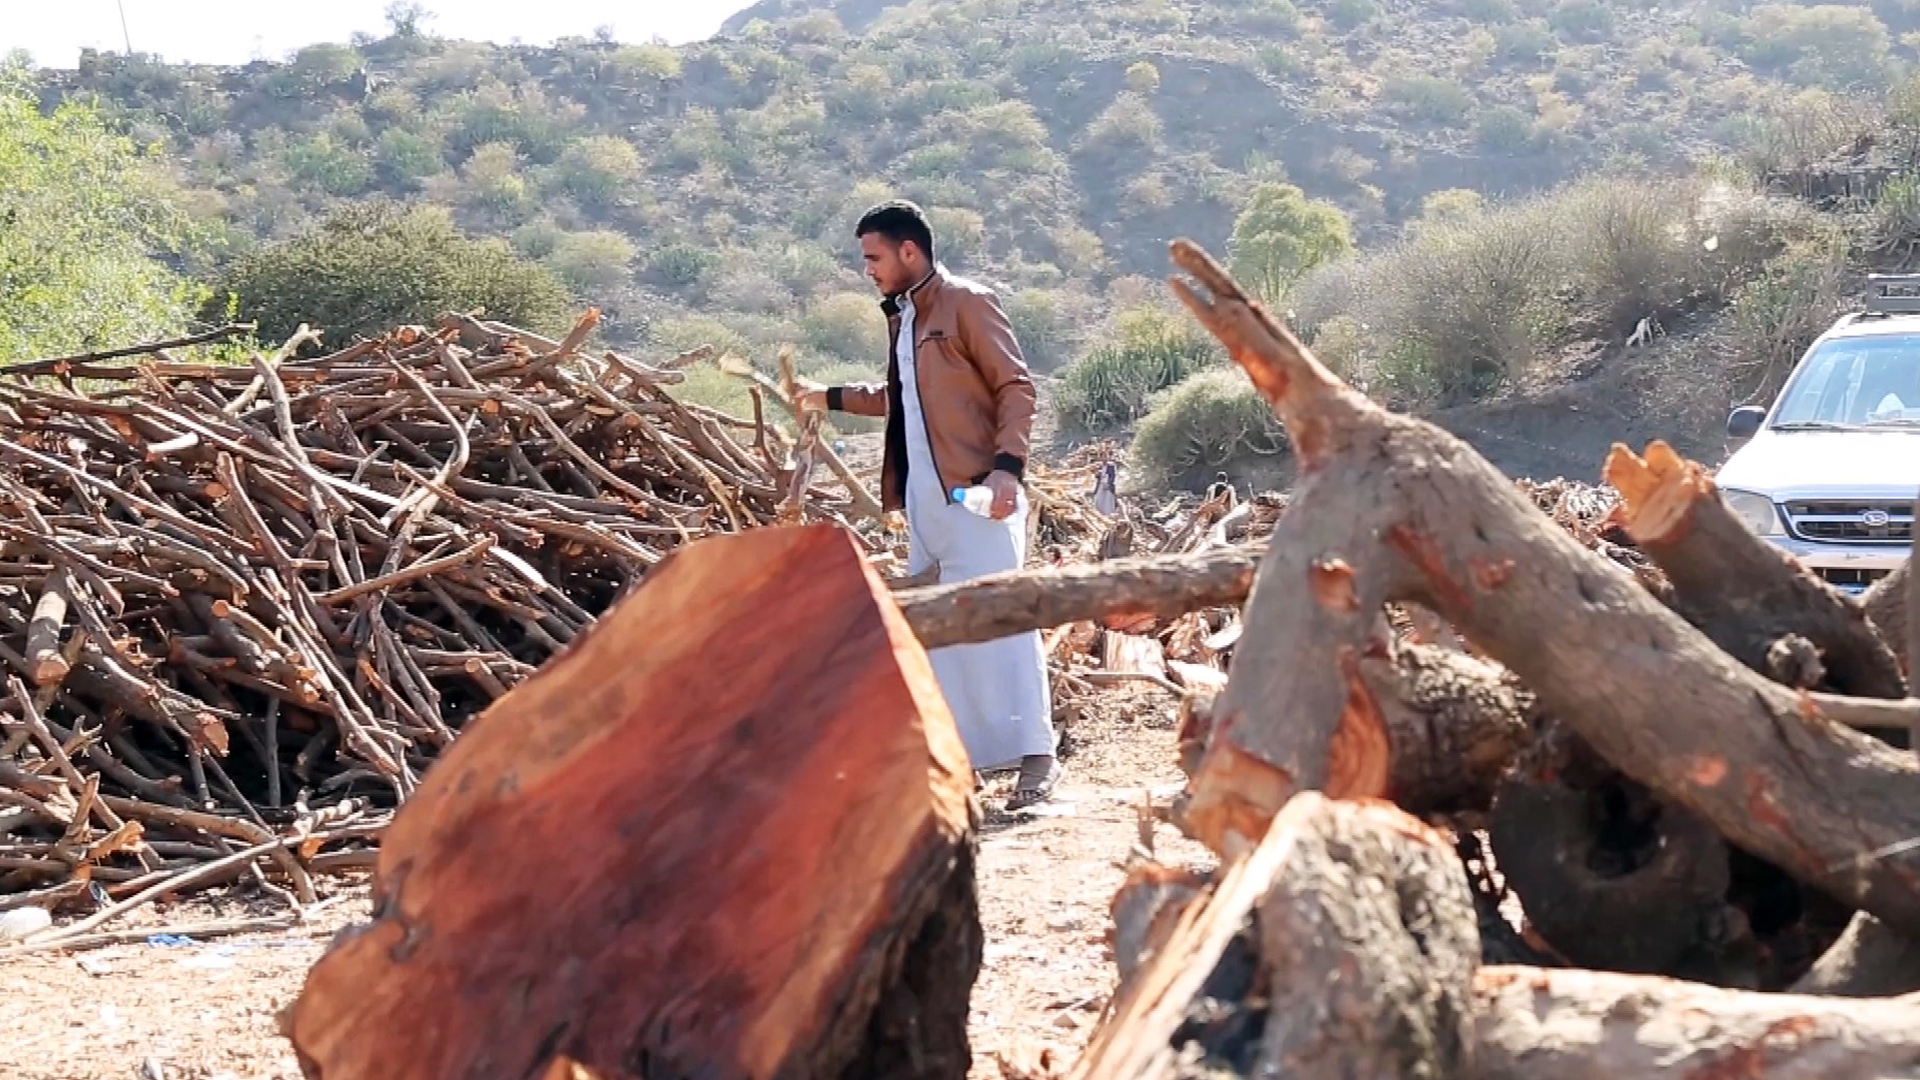 Krieg im Jemen: Letzter Ausweg Baumfällen